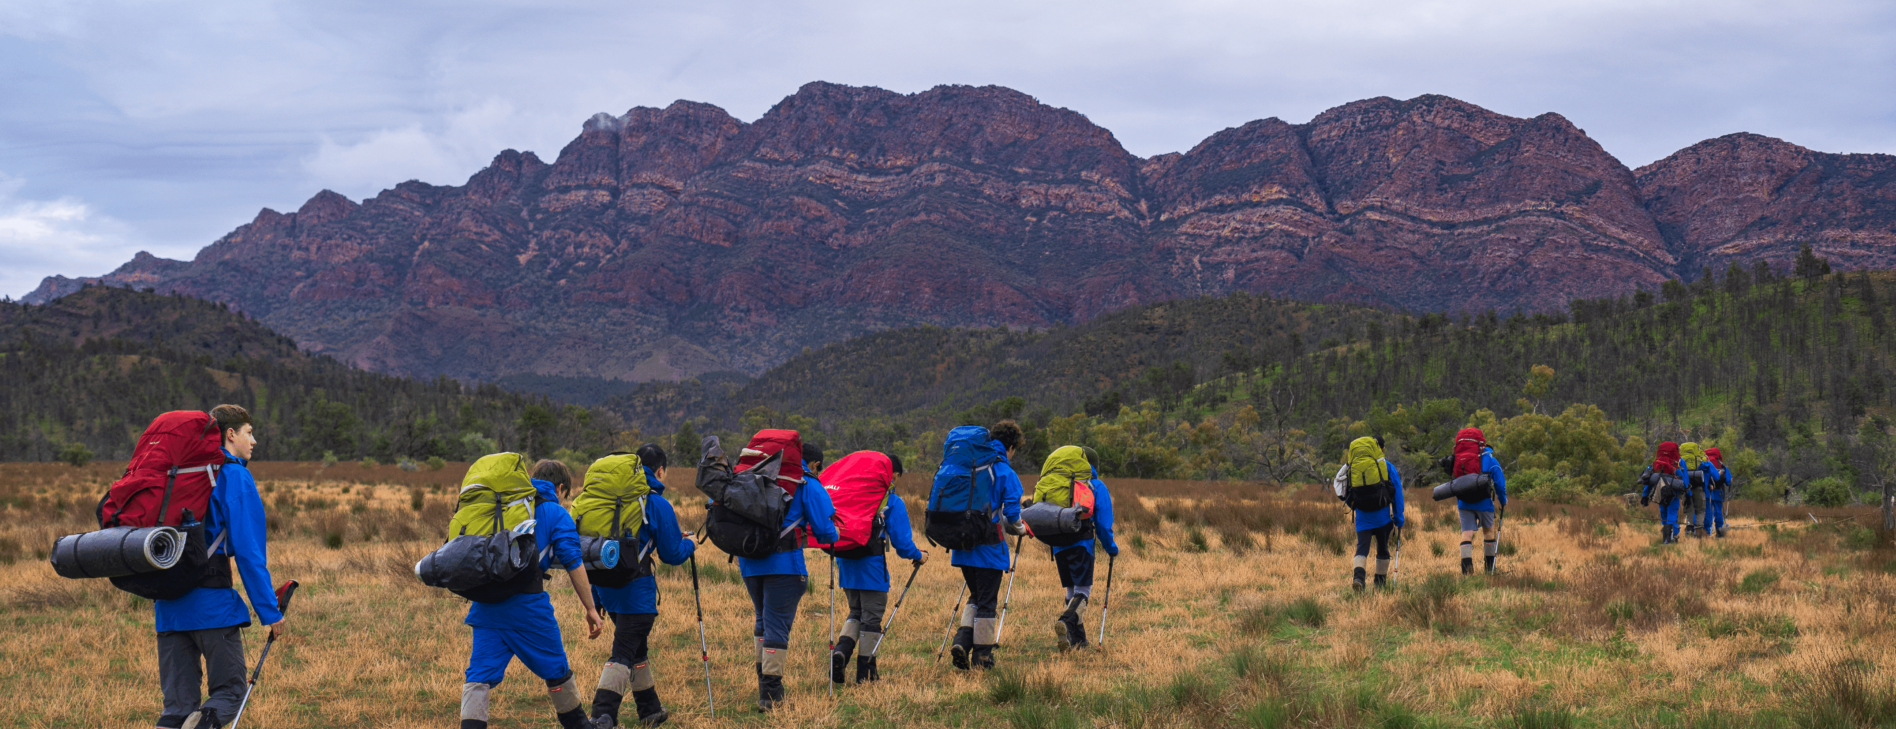 Students walking on a school camp in the Flinders Rangers